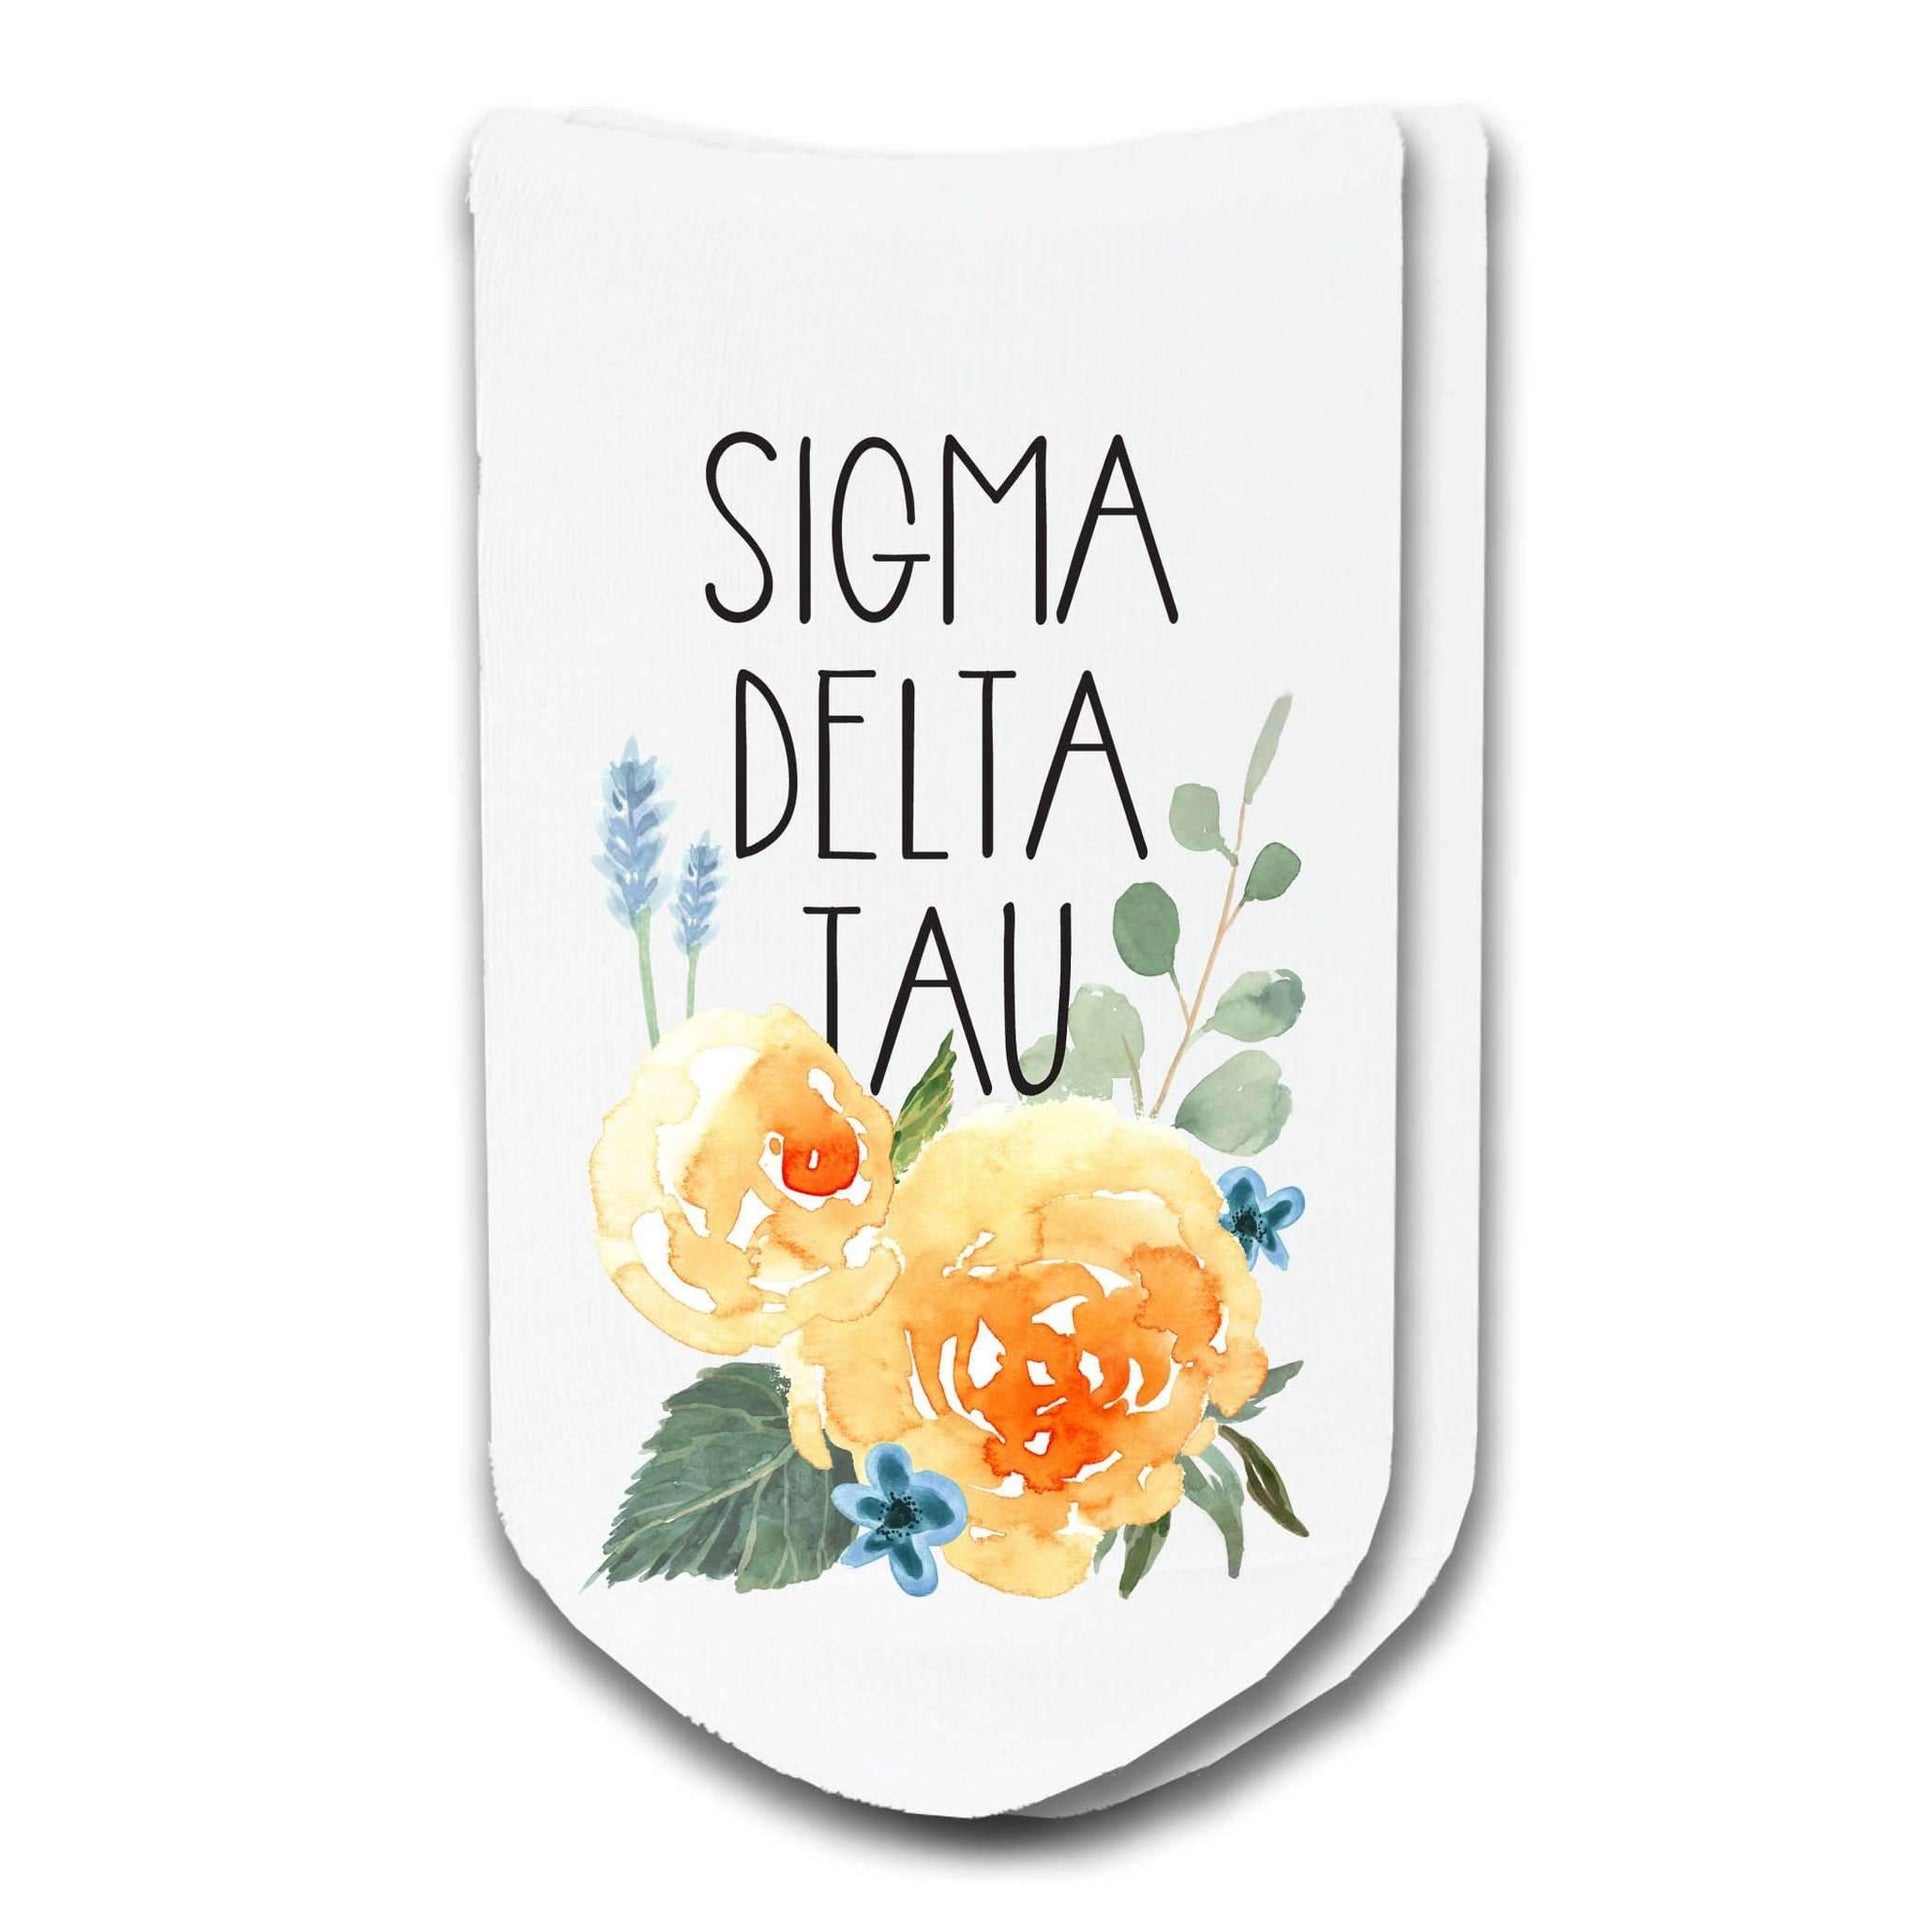 Sigma Delta Tau sorority name watercolor floral design custom printed on white cotton no show socks